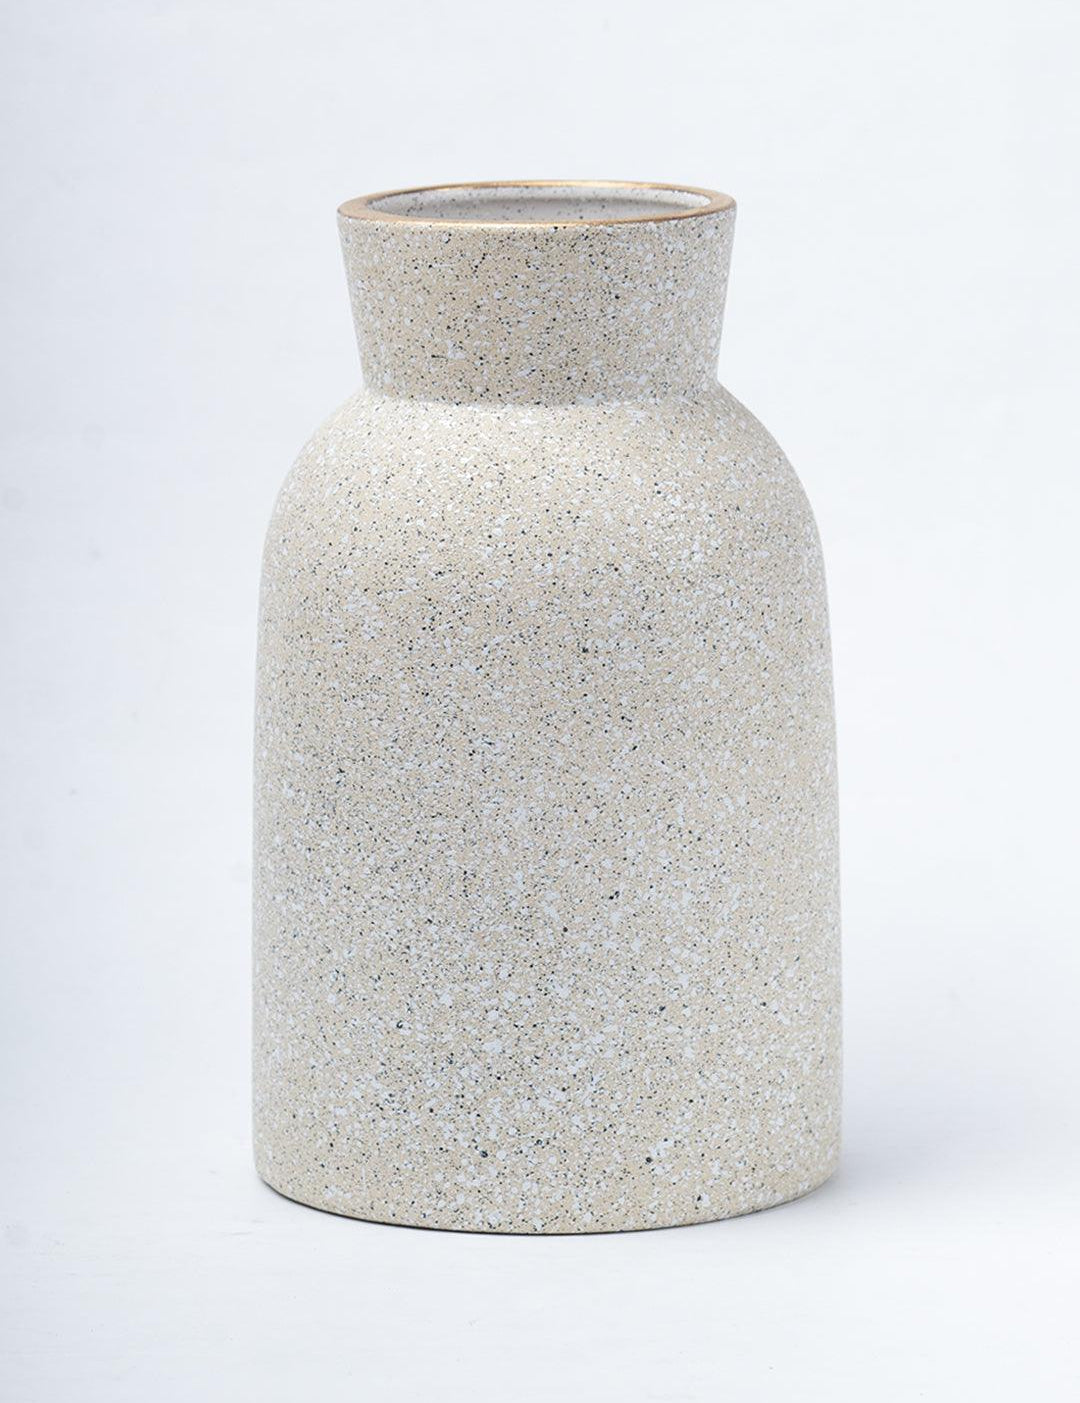 Stylish Flower Holder 'GOURD' Vase - Off White, Stone Finish - 2